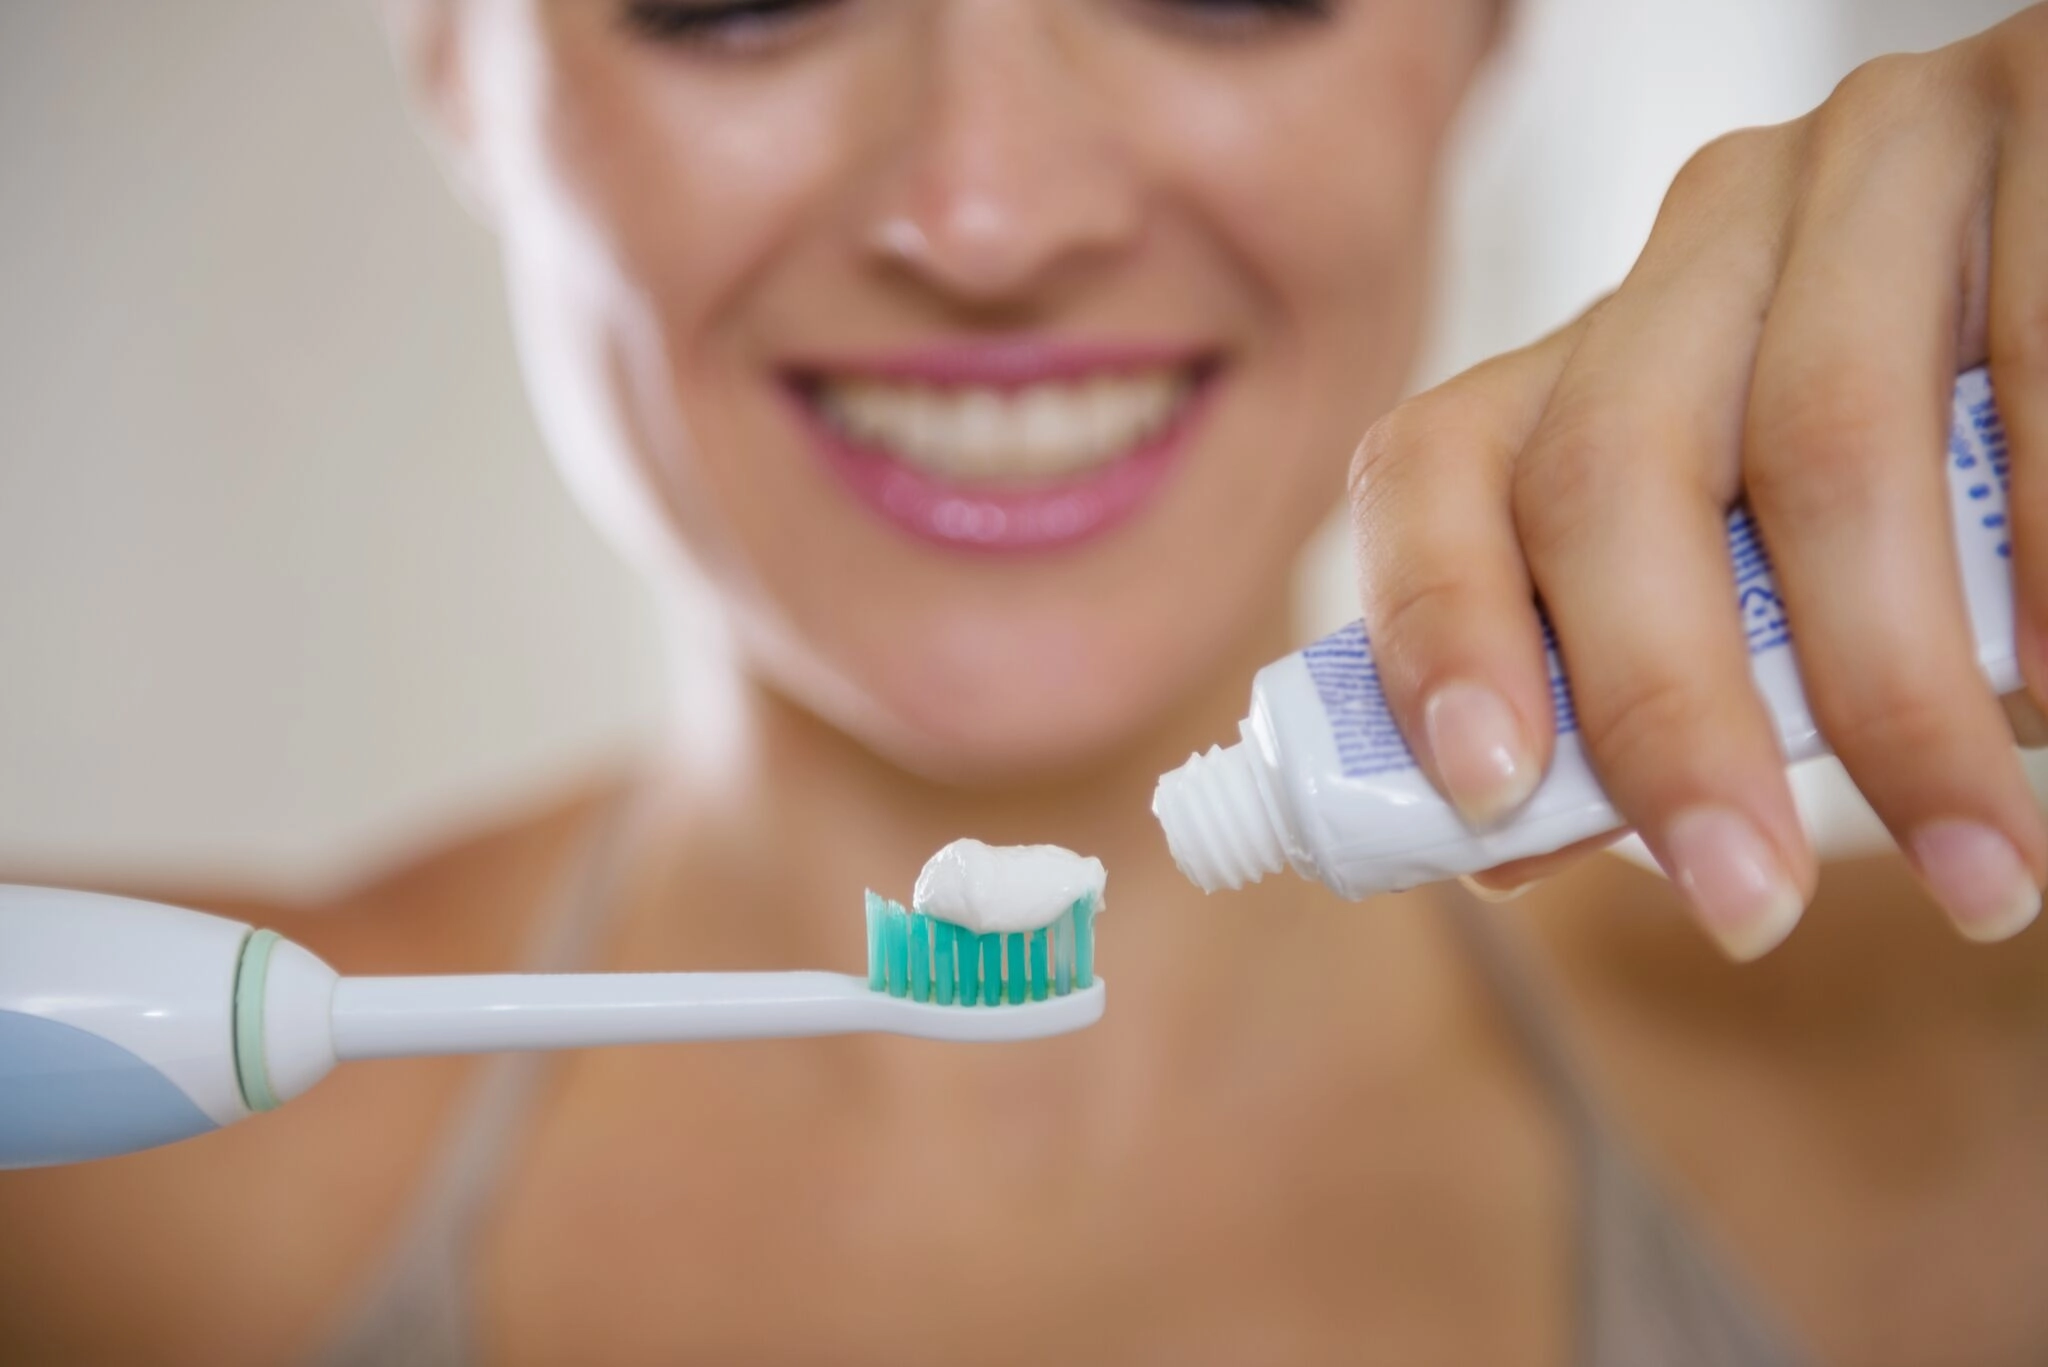 Avoiding Common Toothbrushing Mistakes